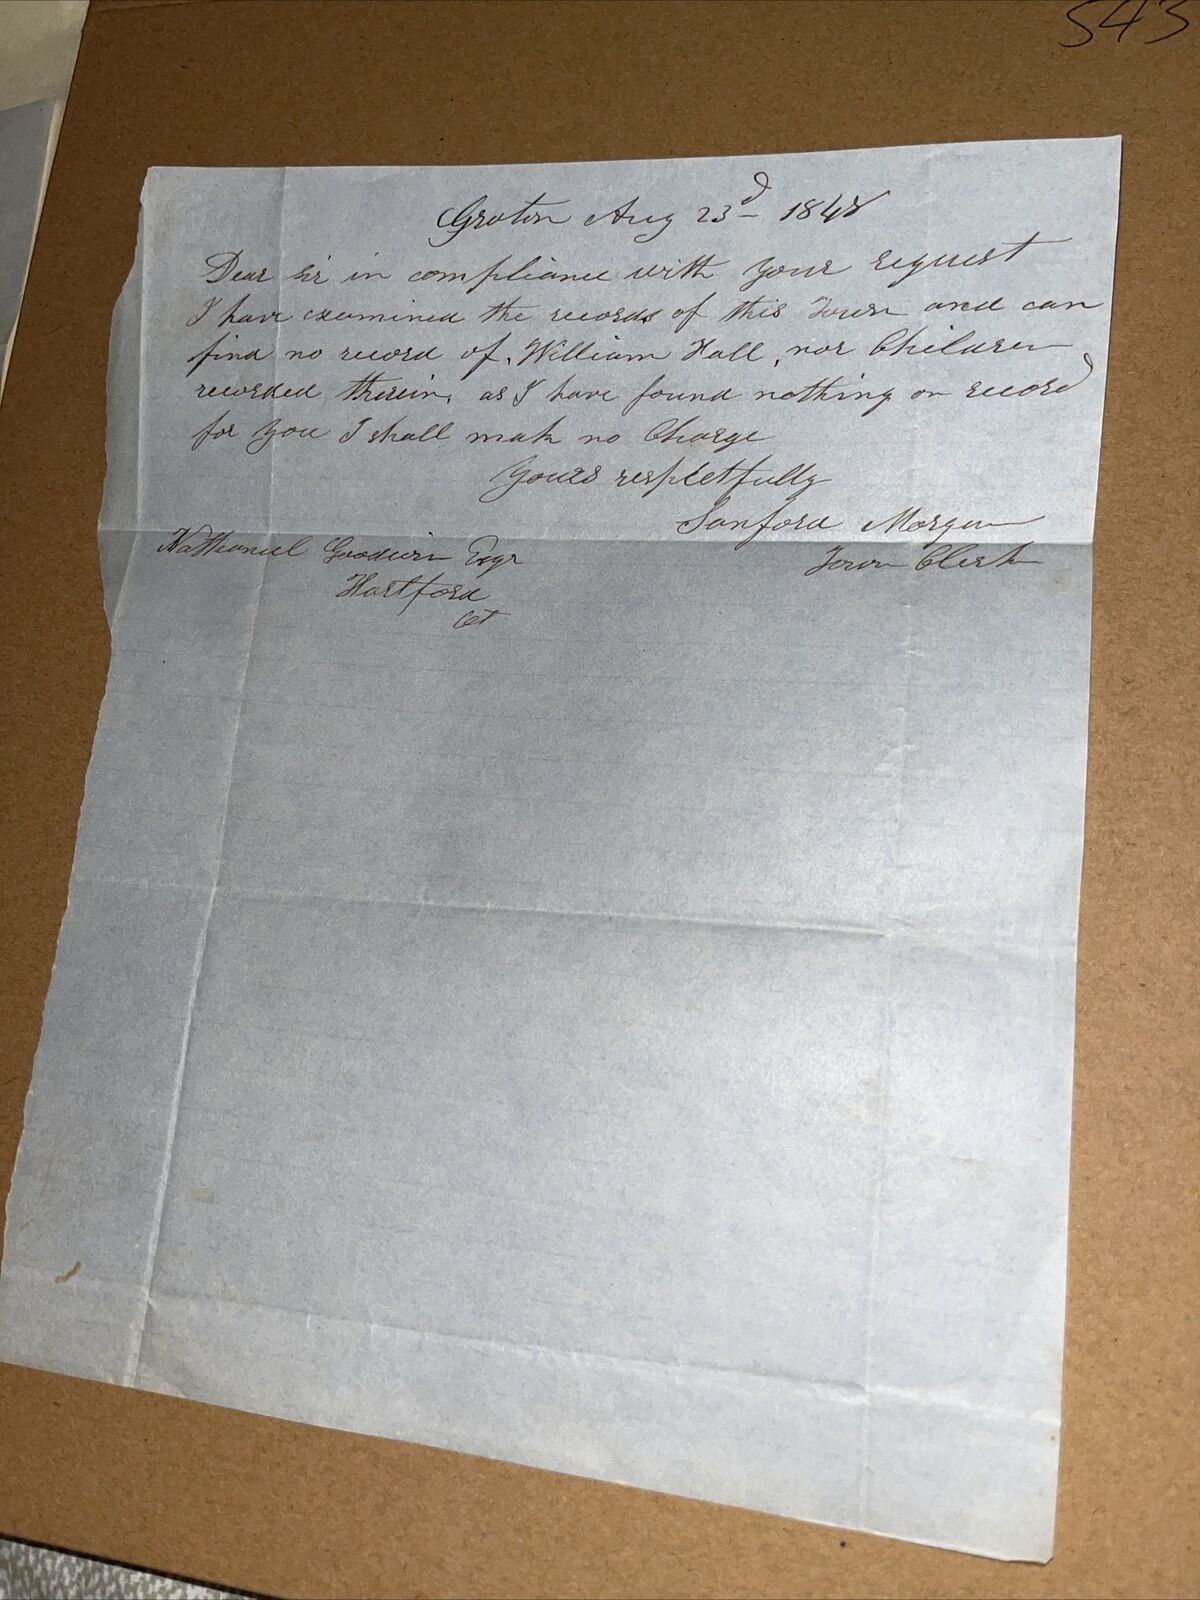 1848 Groton Town Clerk Letter to Famous Hartford Genealogist: Genealogy Request